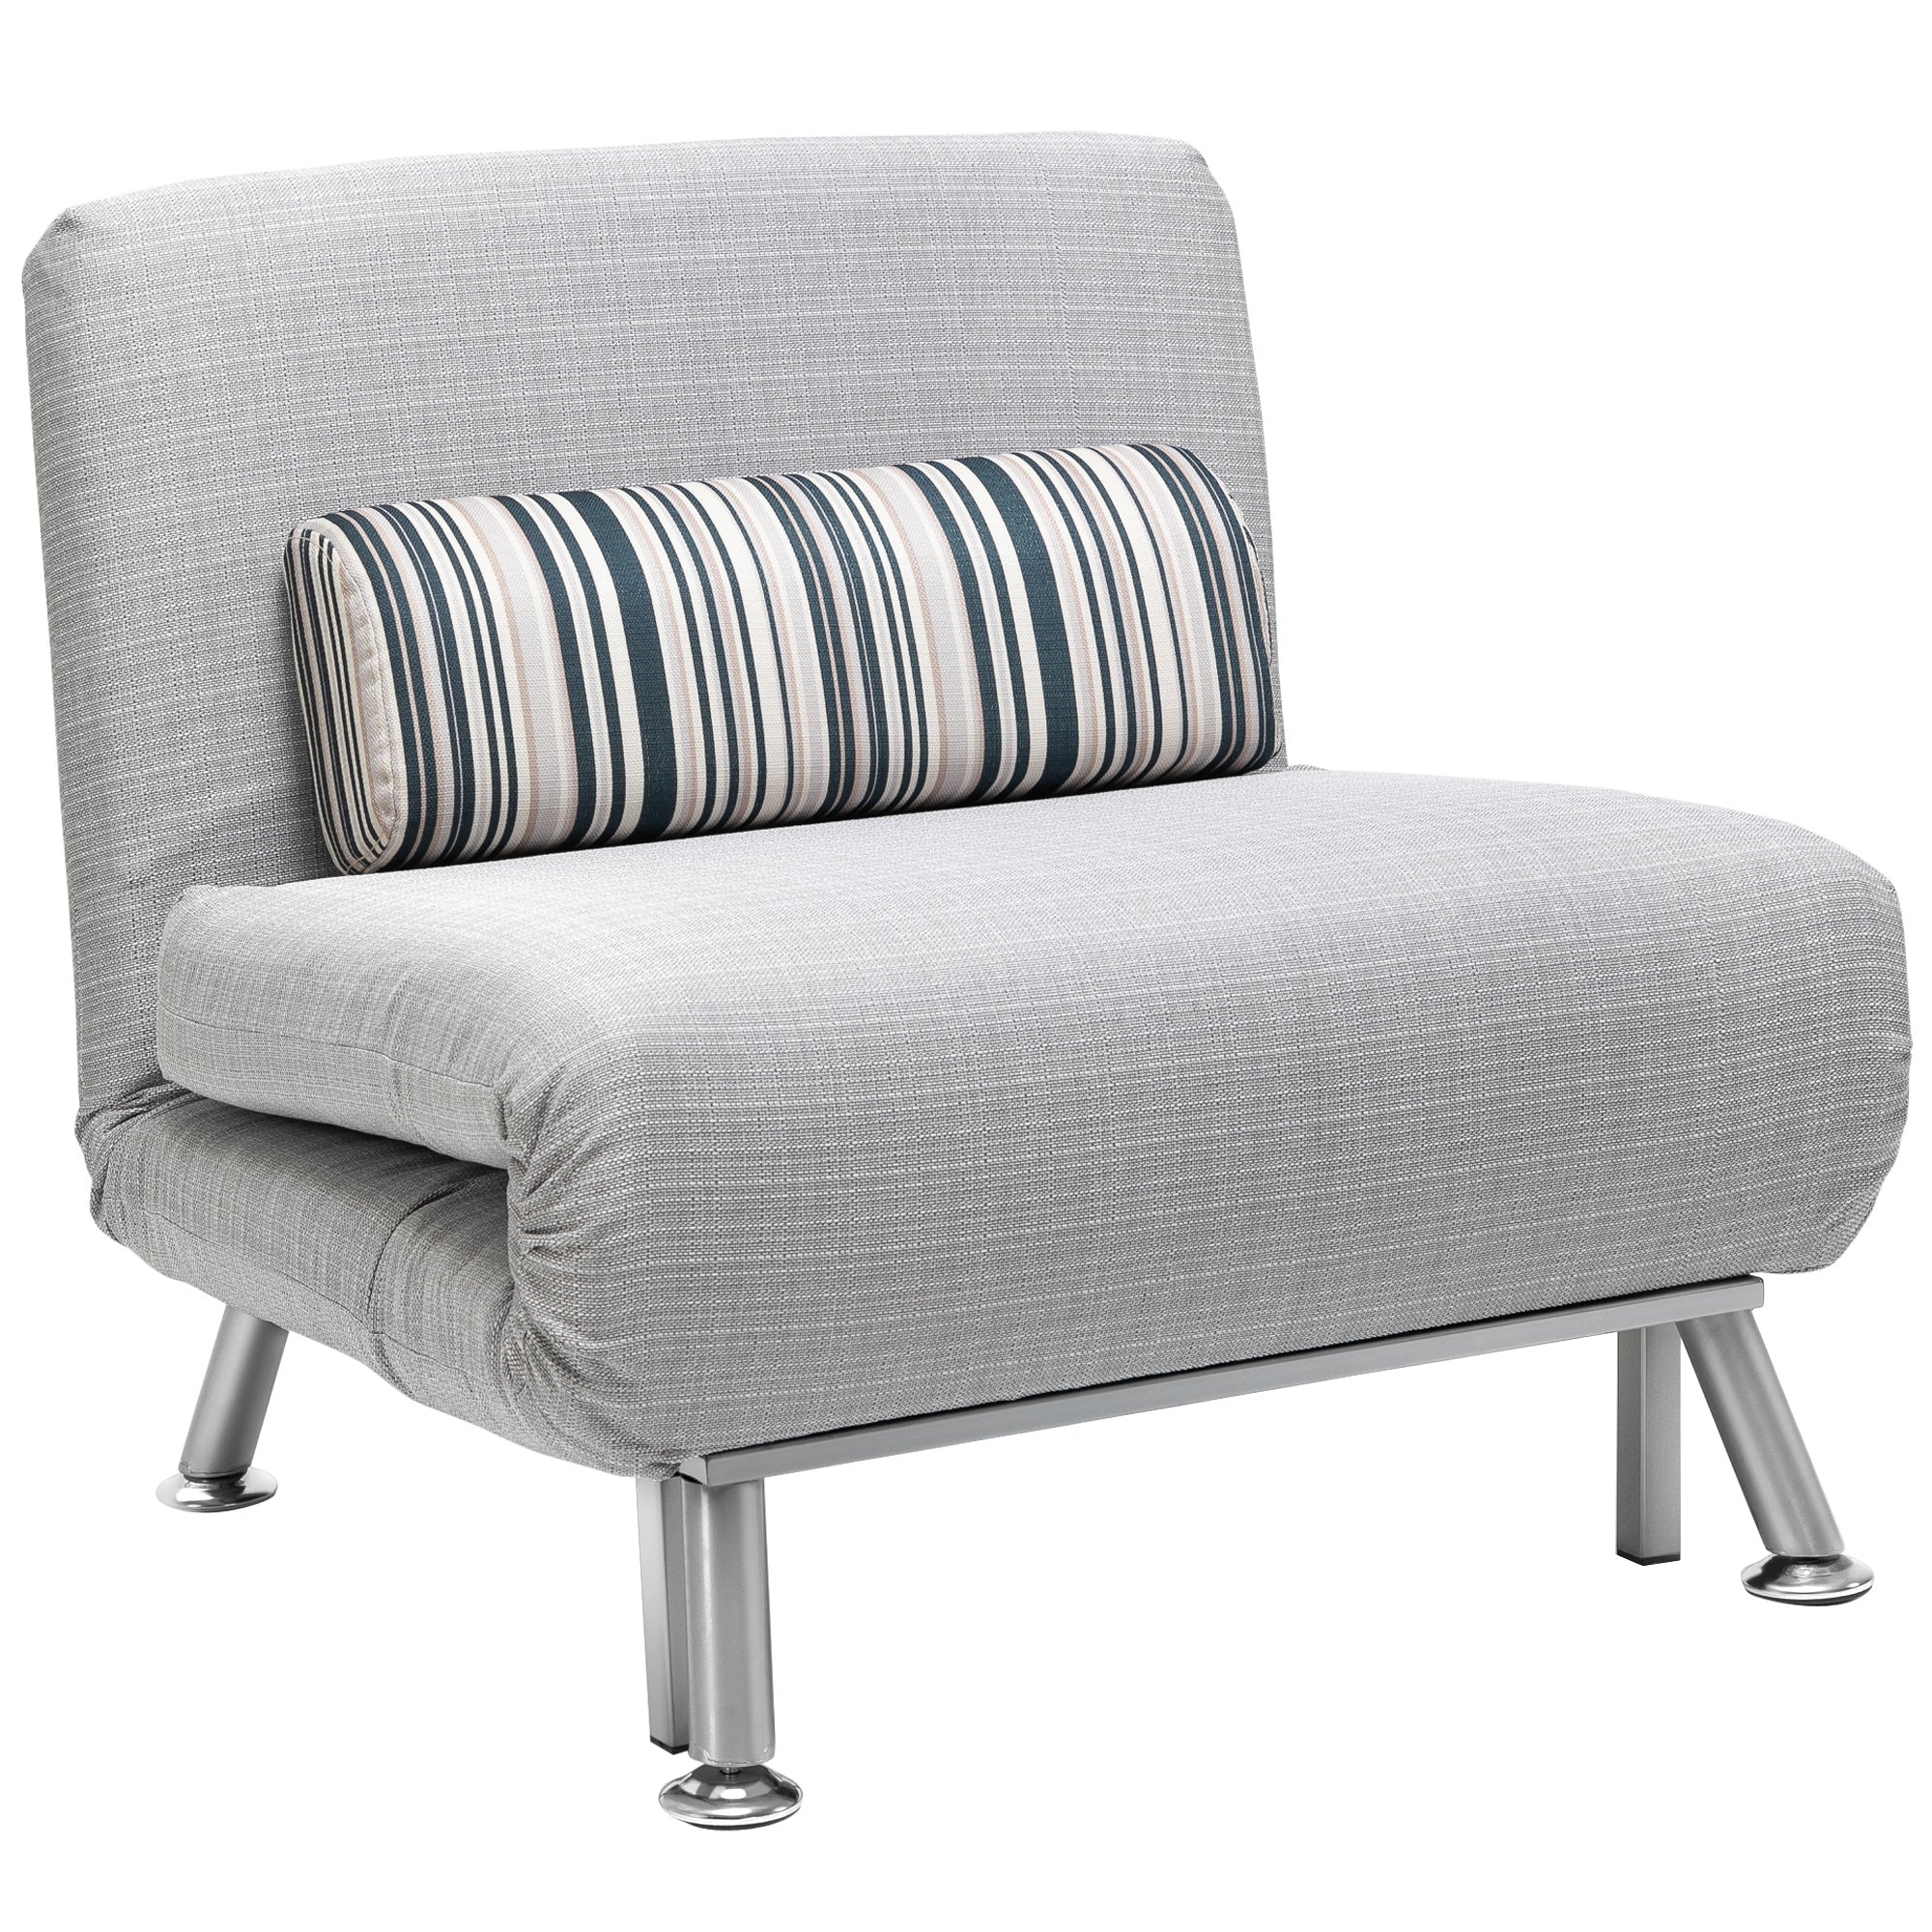 HOMCOM Single Folding 5 Position Convertible Sleeper Chair Sofa Bed Grey - Silver  | TJ Hughes